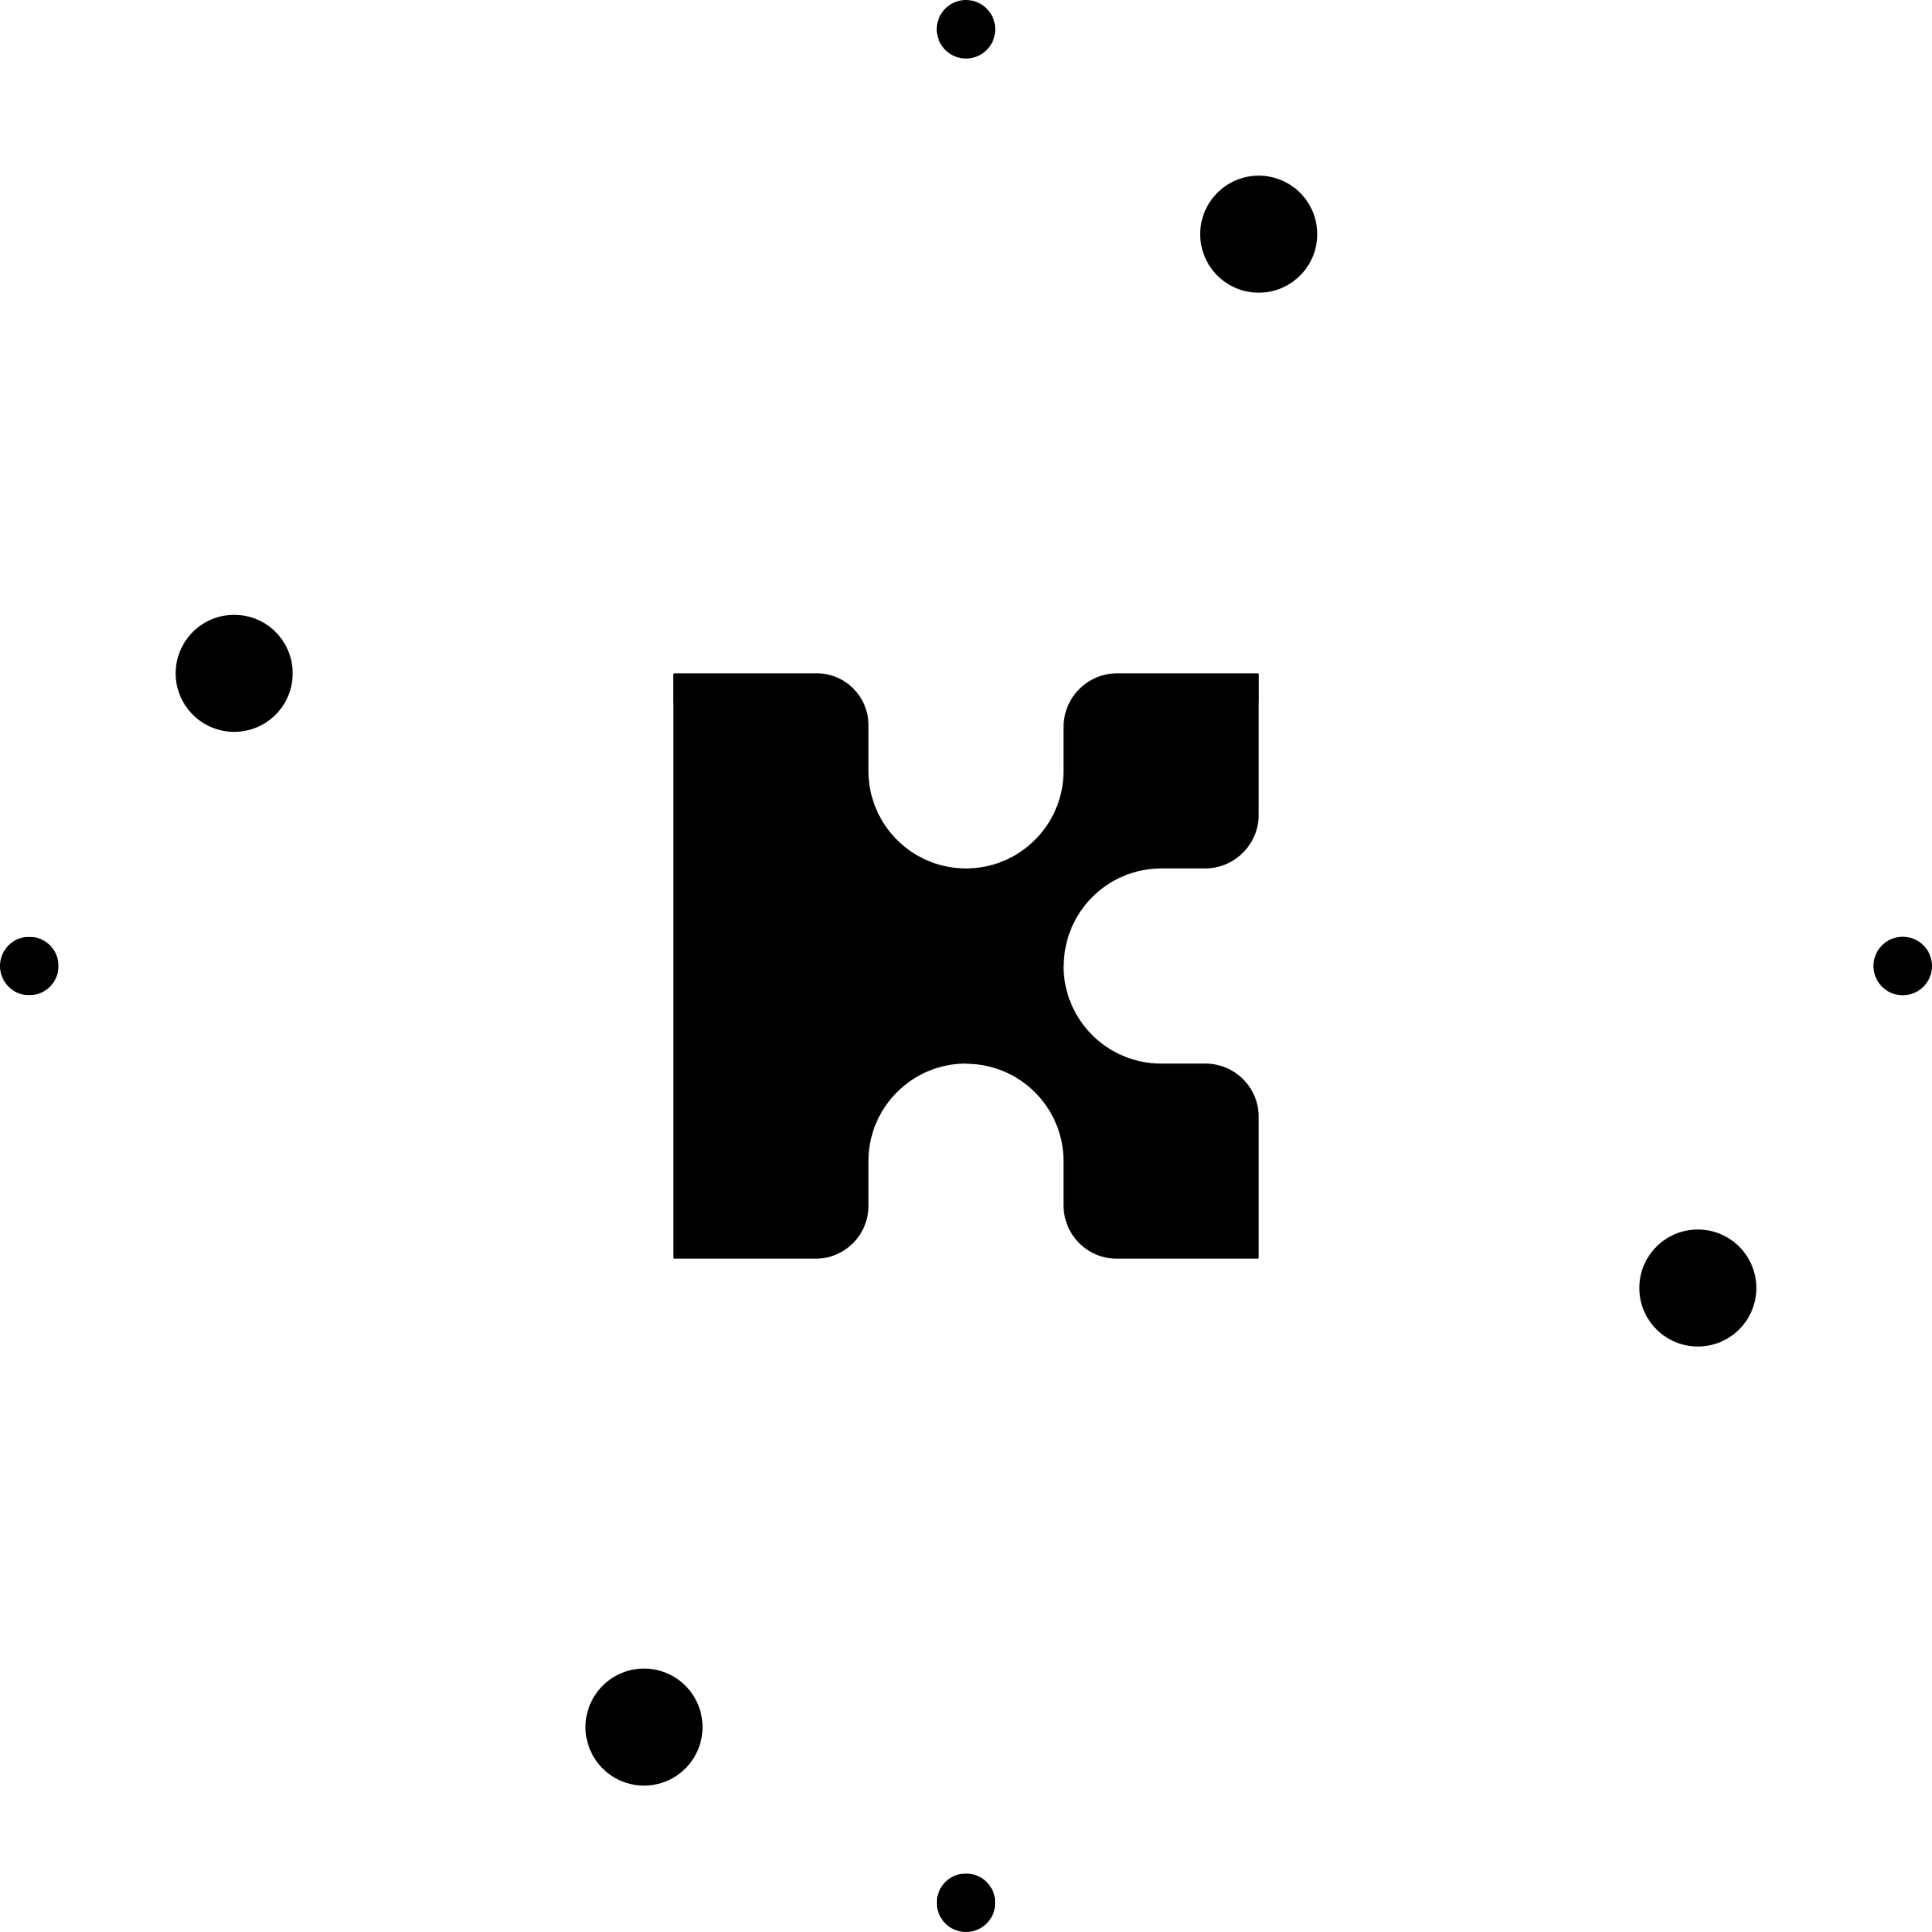 Kin Logo - Kin Logo PNG Transparent & SVG Vector - Freebie Supply